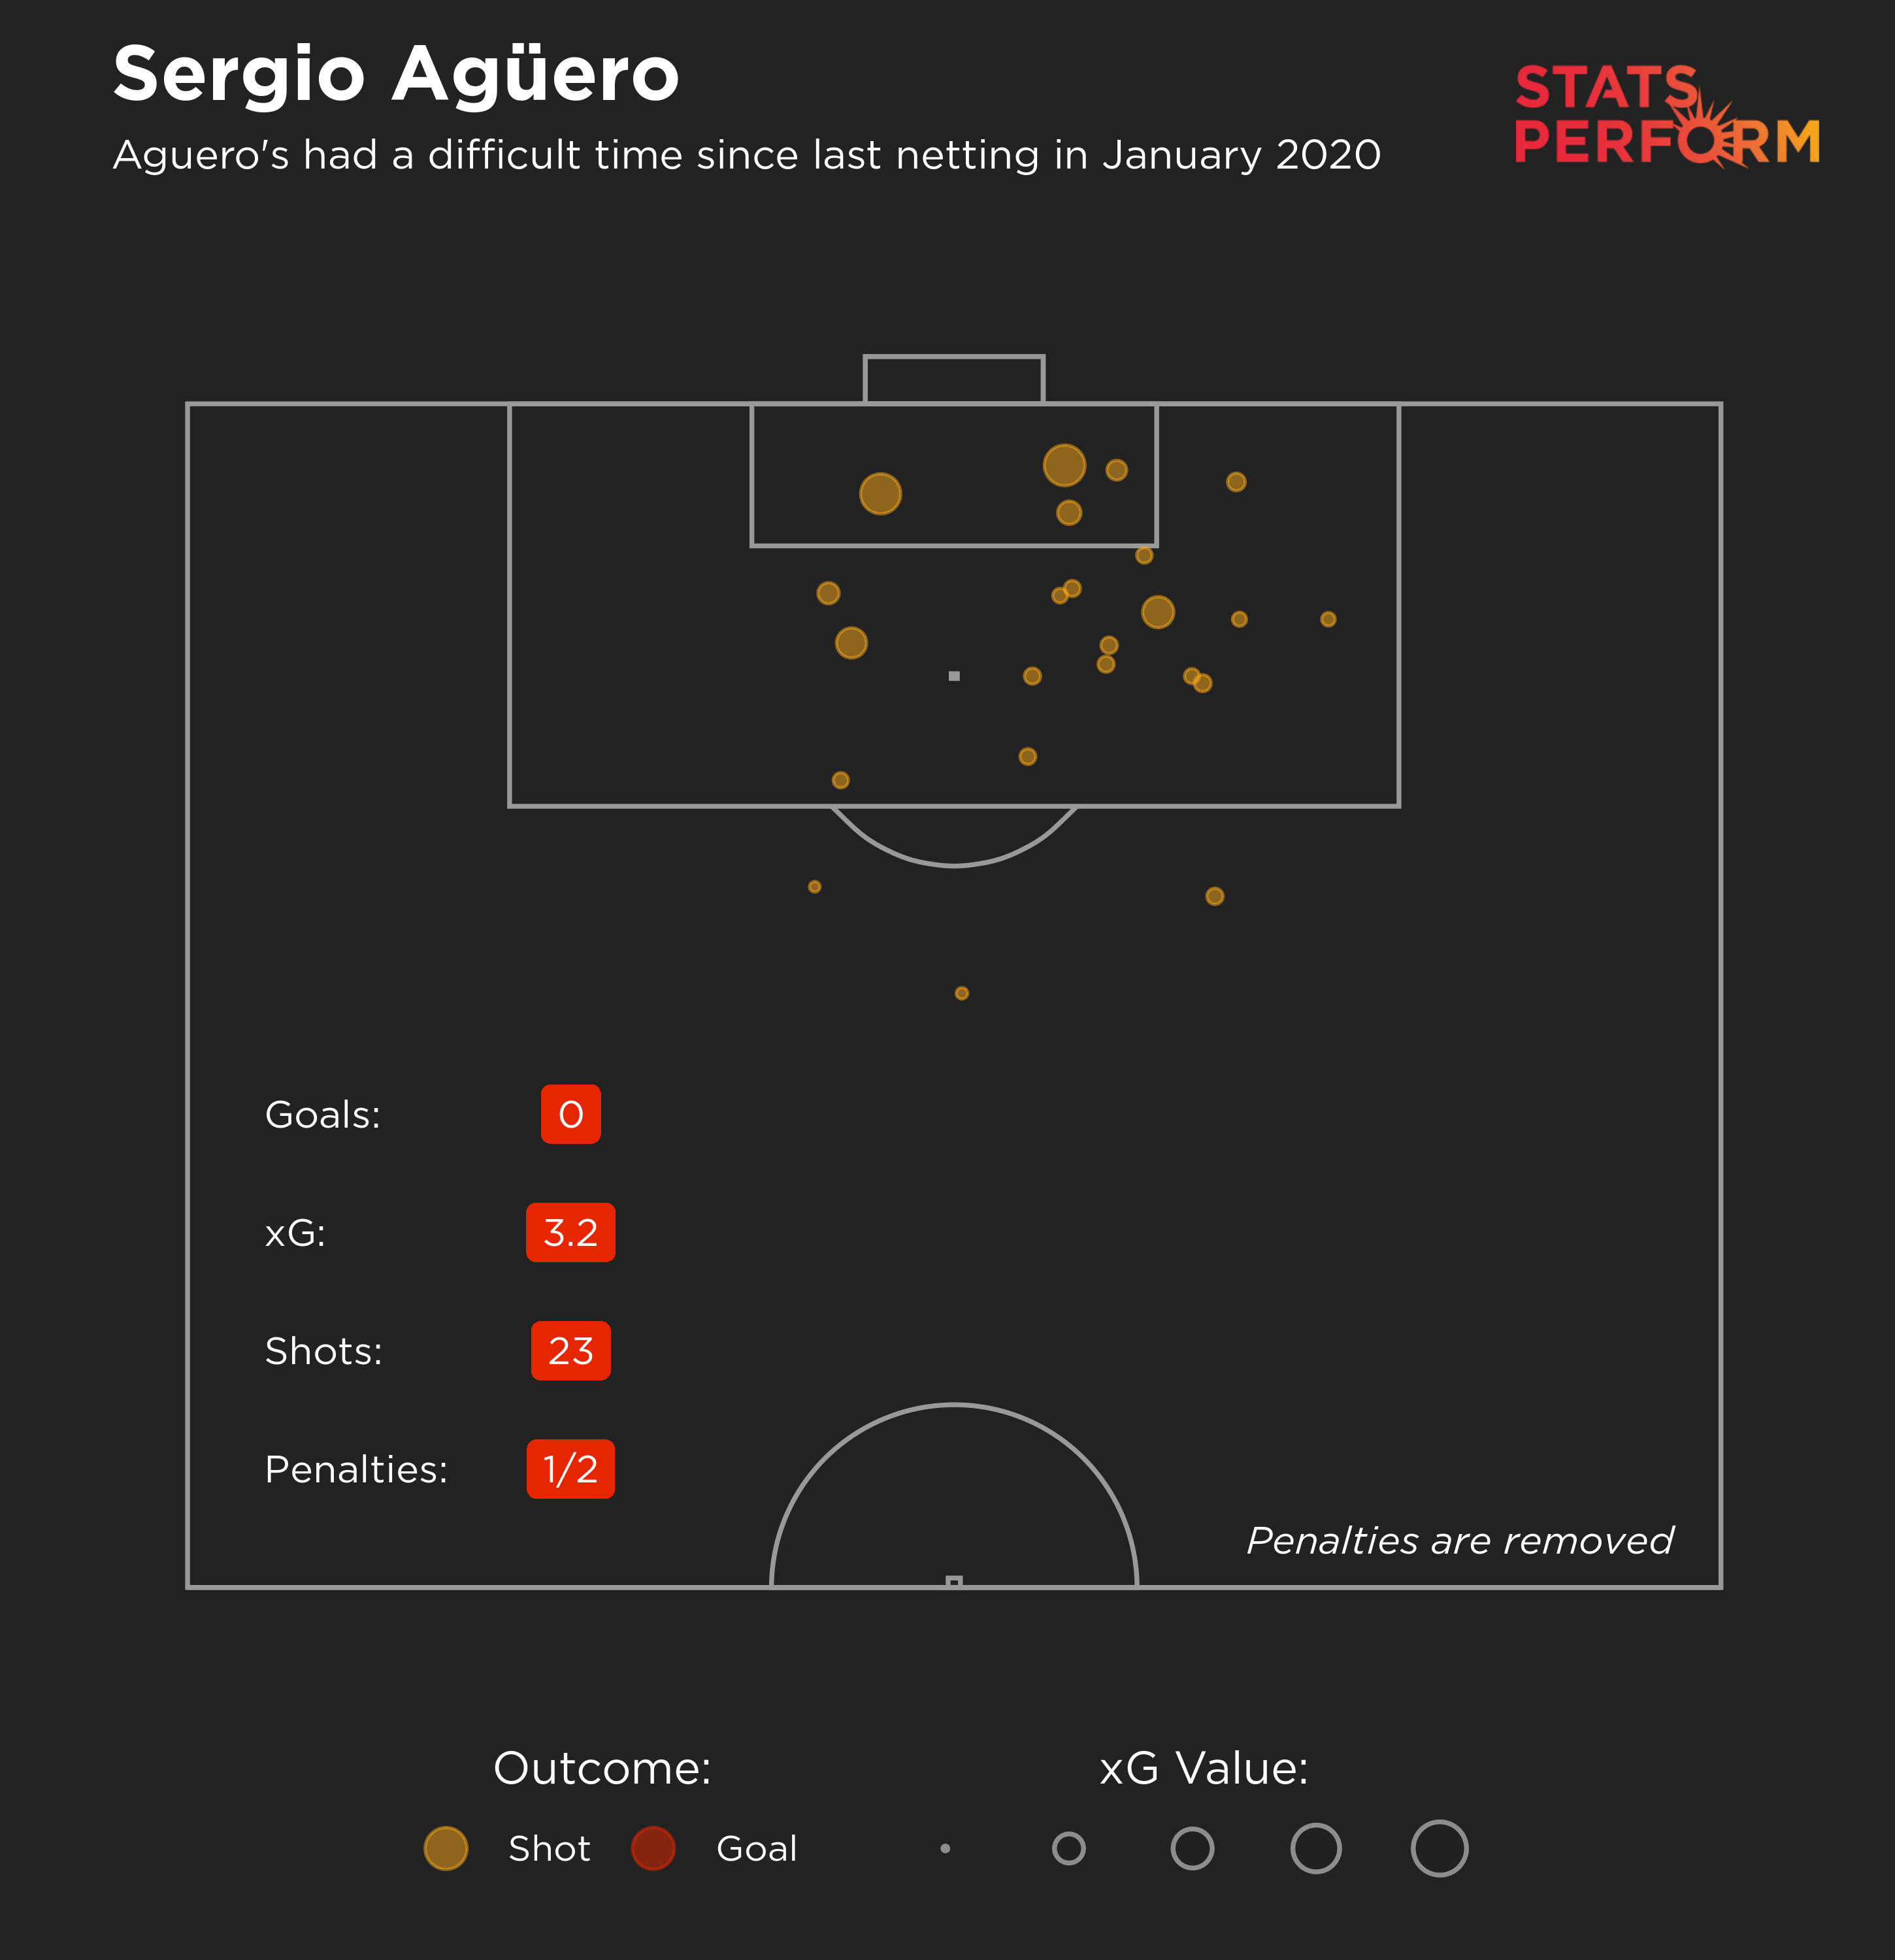 Sergio Aguero's xG (expected goals) map since his last goal